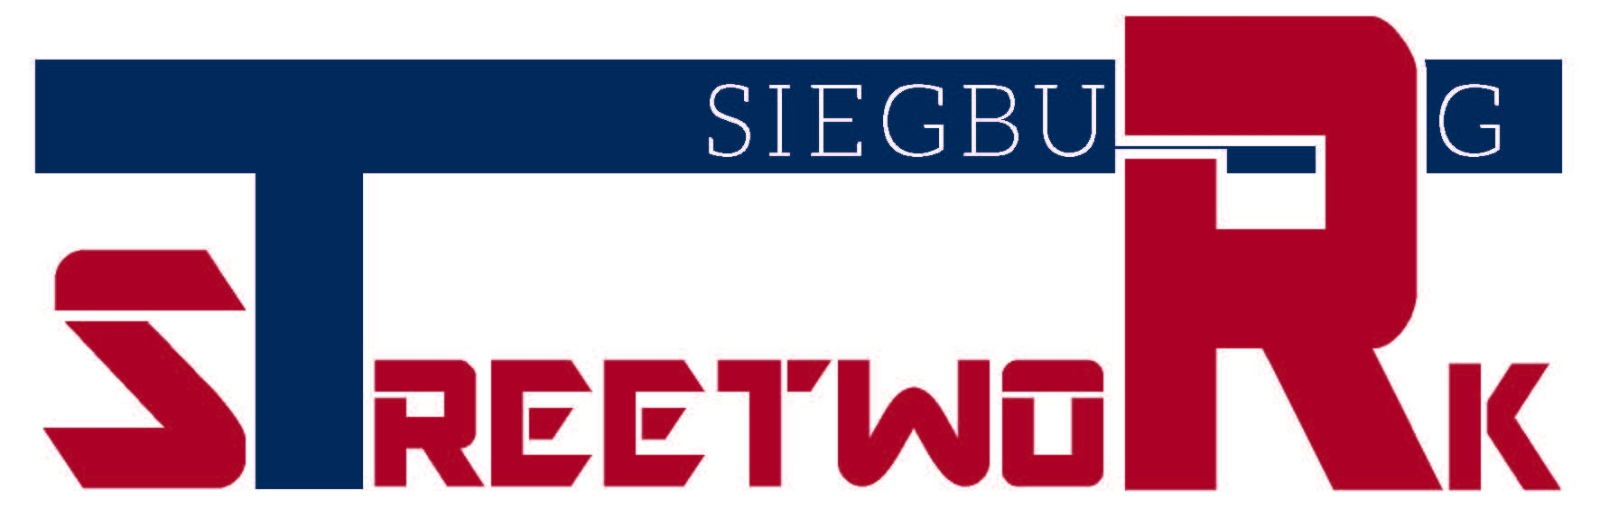 Logo Streetwork Siegburg